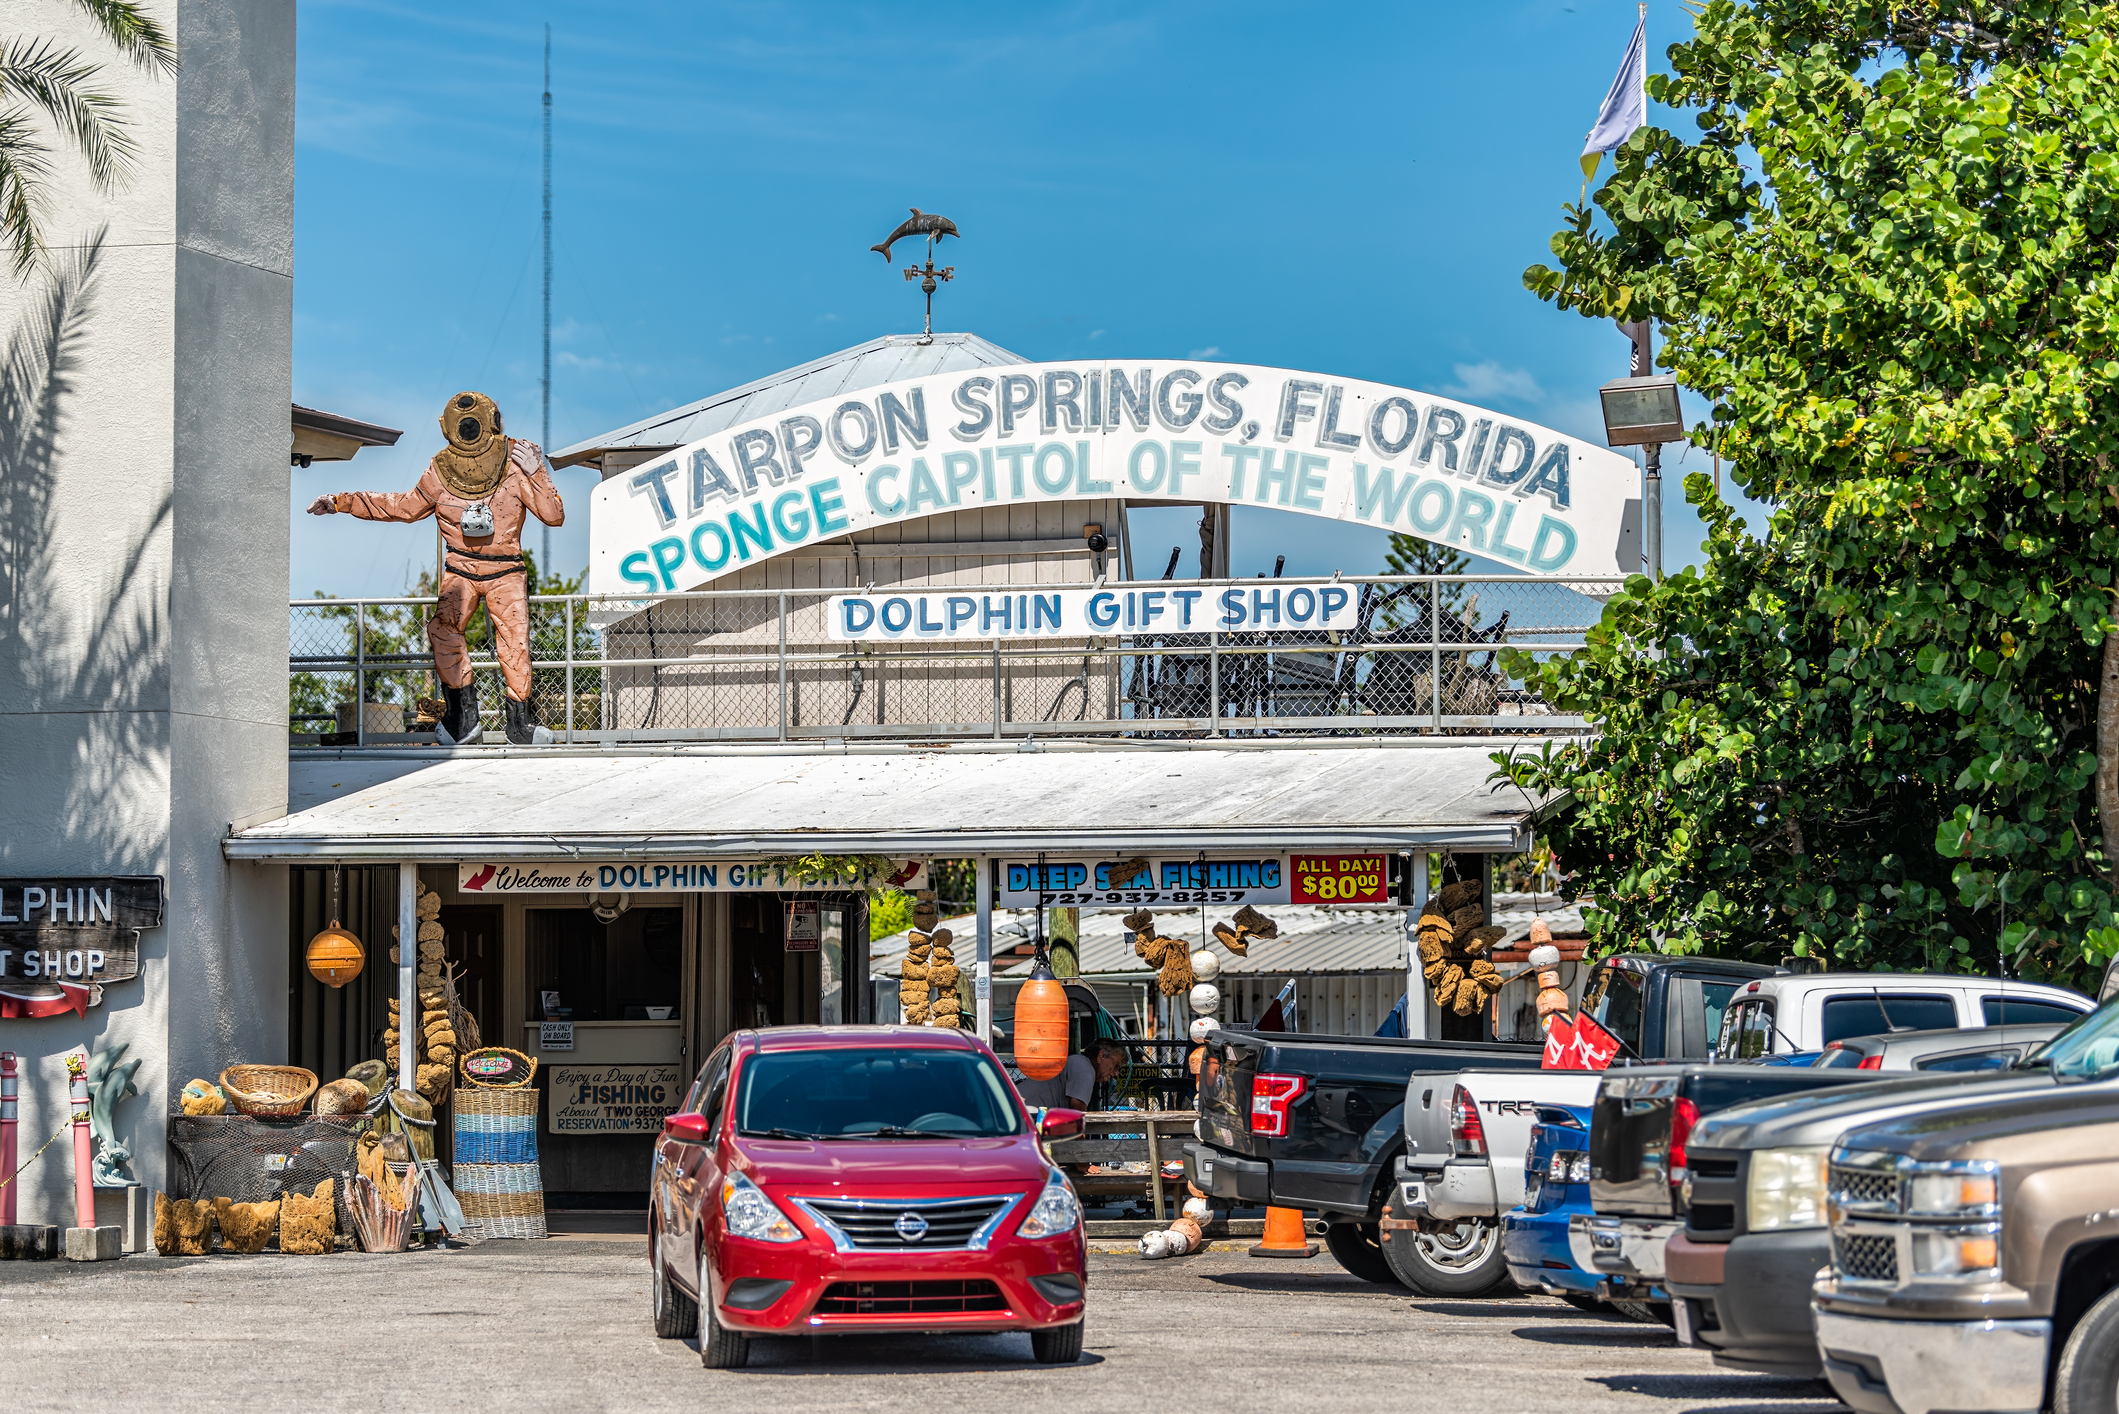 Sponge Capital of the World near Tampa, FL.